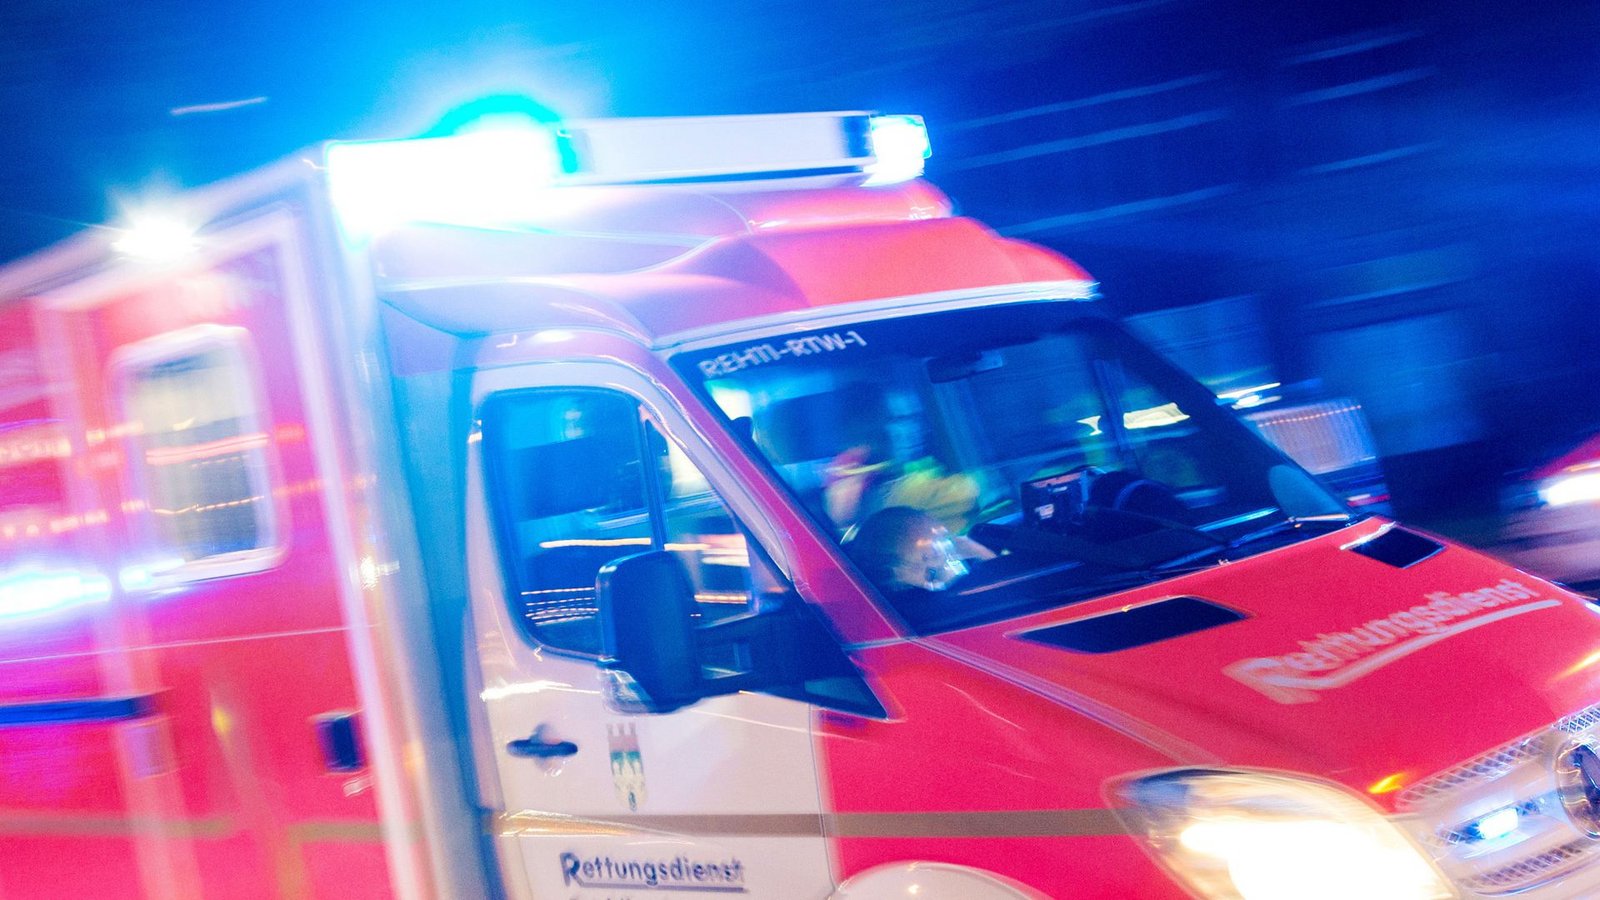 Rettungskräfte brachten den Schwerverletzten ins Krankenhaus. (Symbolbild)Foto: dpa/Marcel Kusch